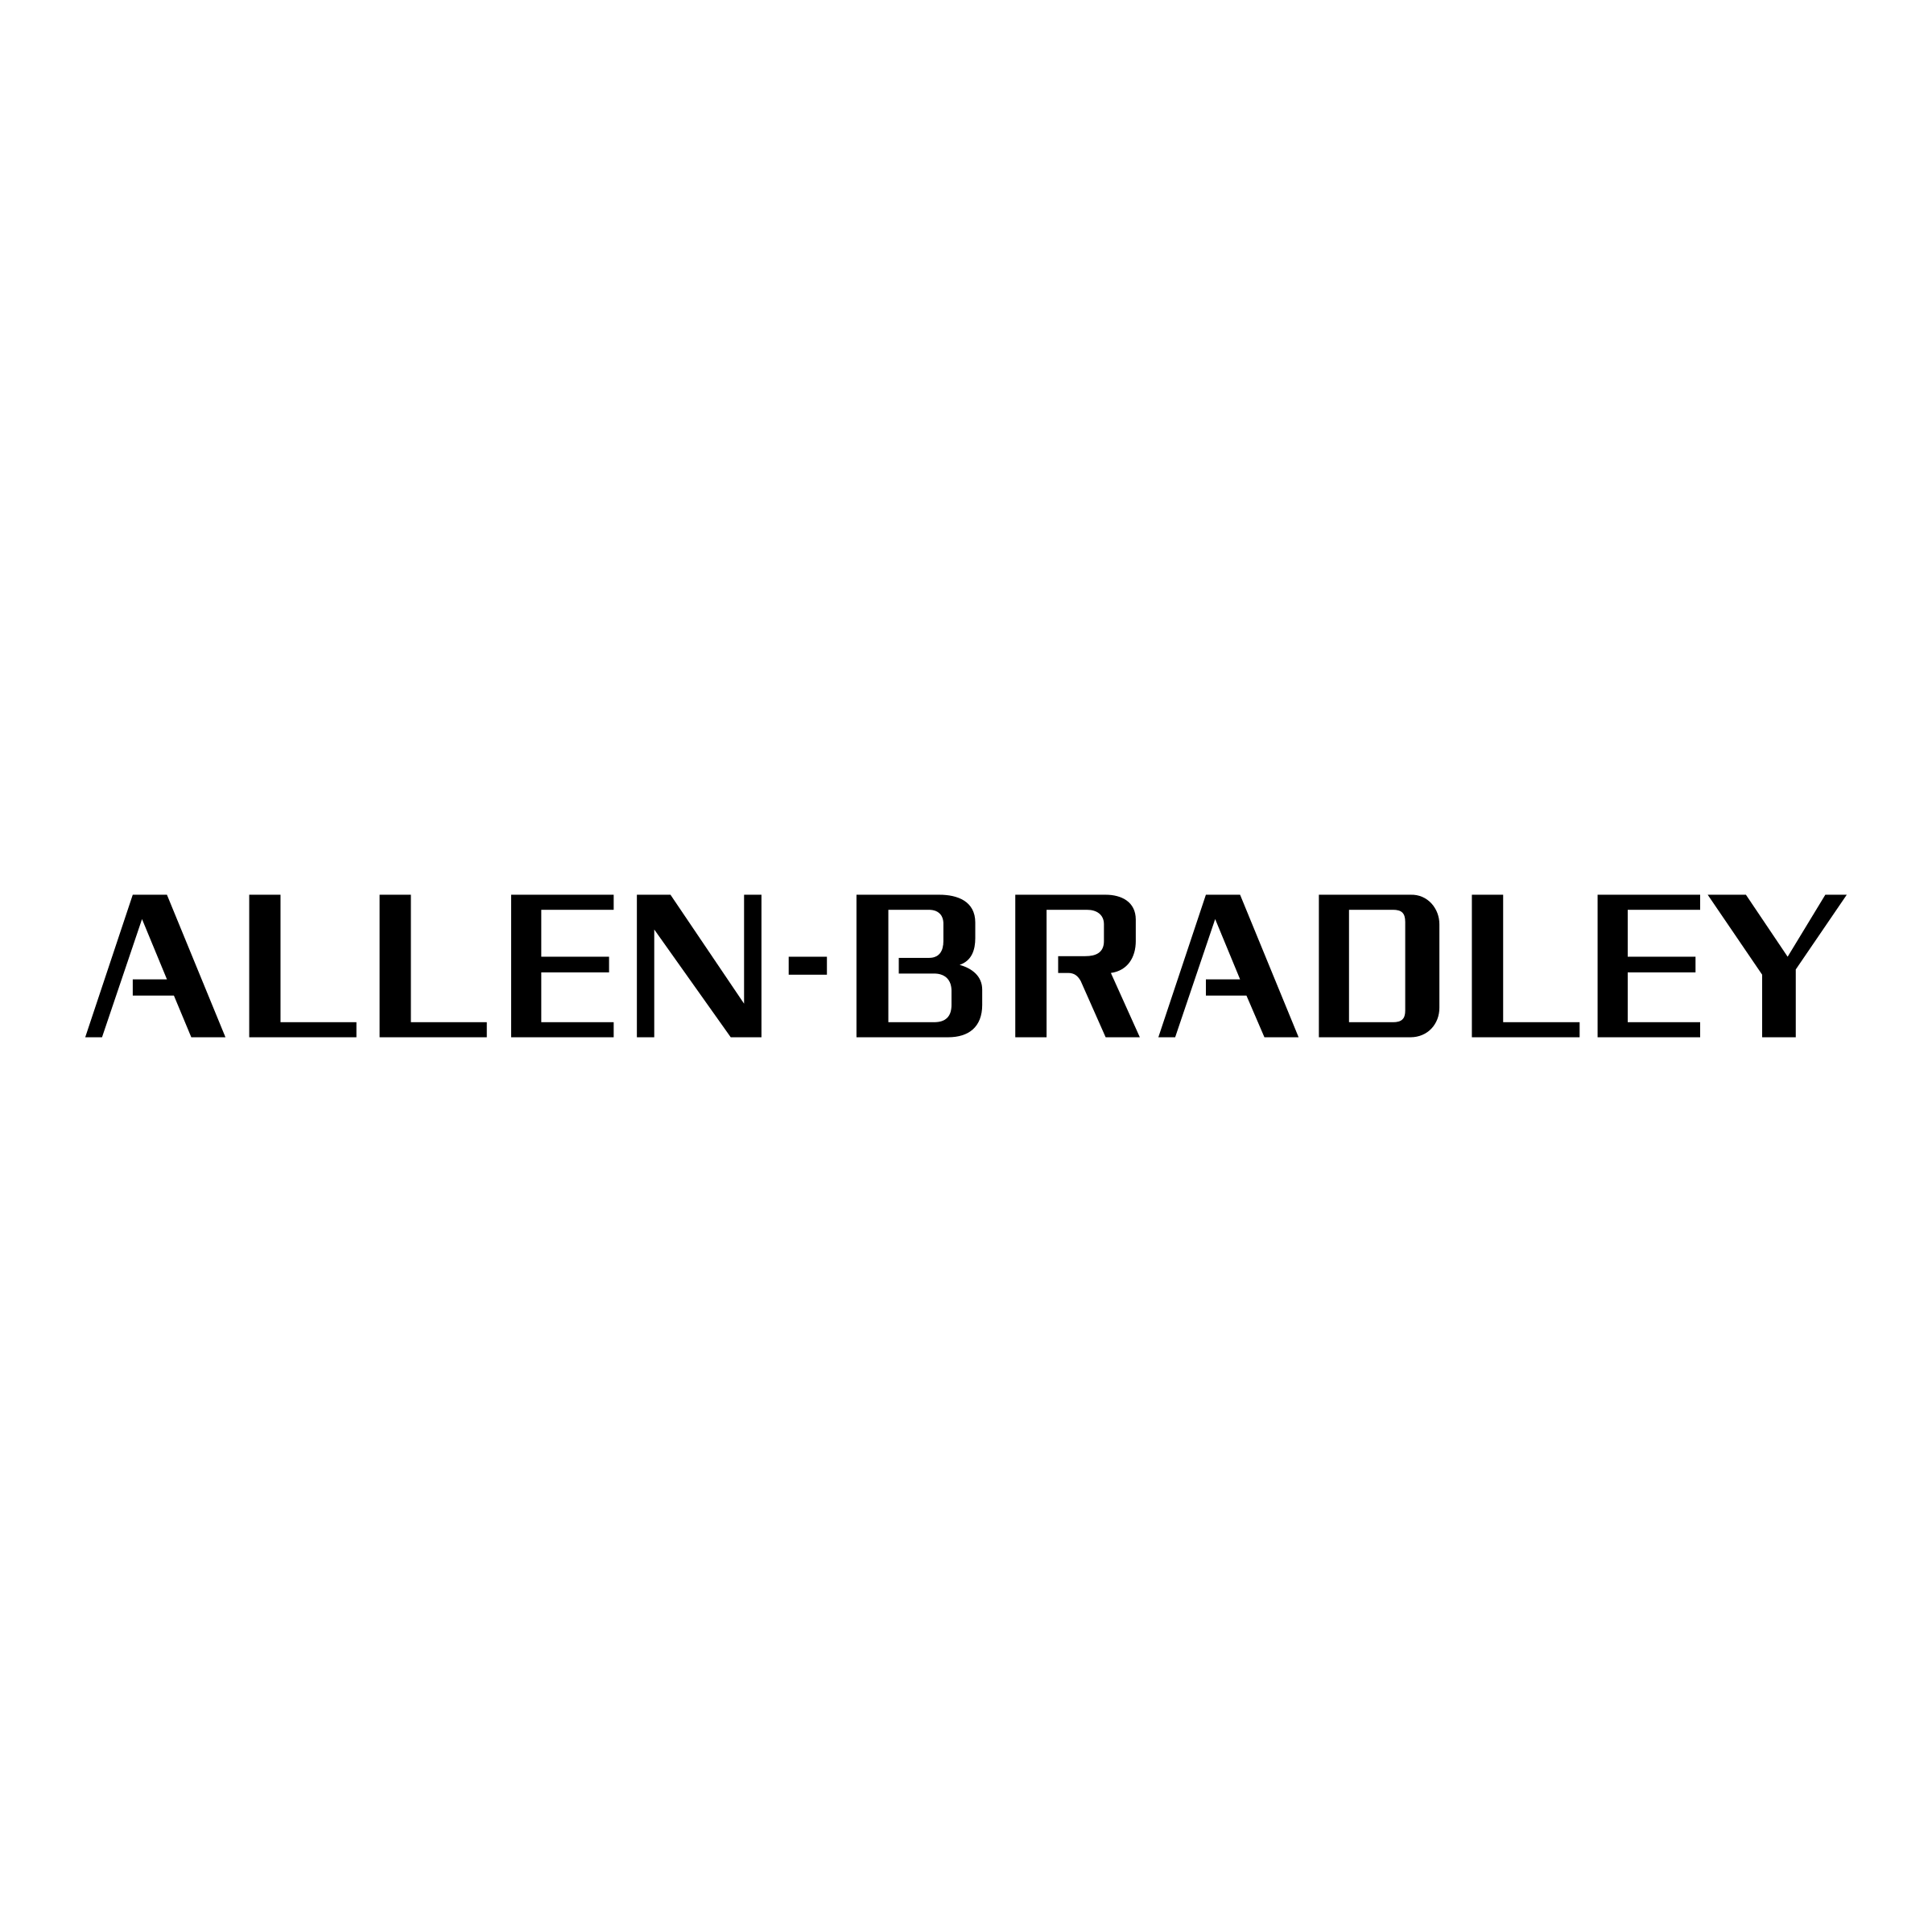 Allen Logo - Allen Bradley 01 Logo PNG Transparent & SVG Vector